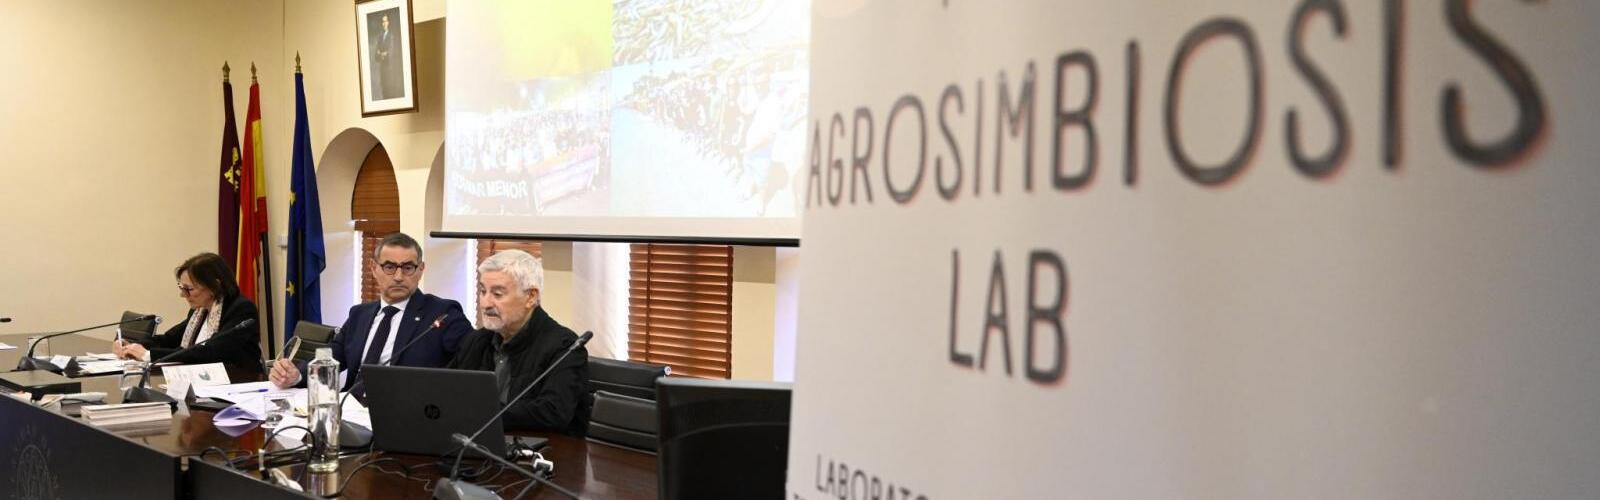 Nota de prensa - La UMU lidera AgrosimbiosisLab, un proyecto para co...